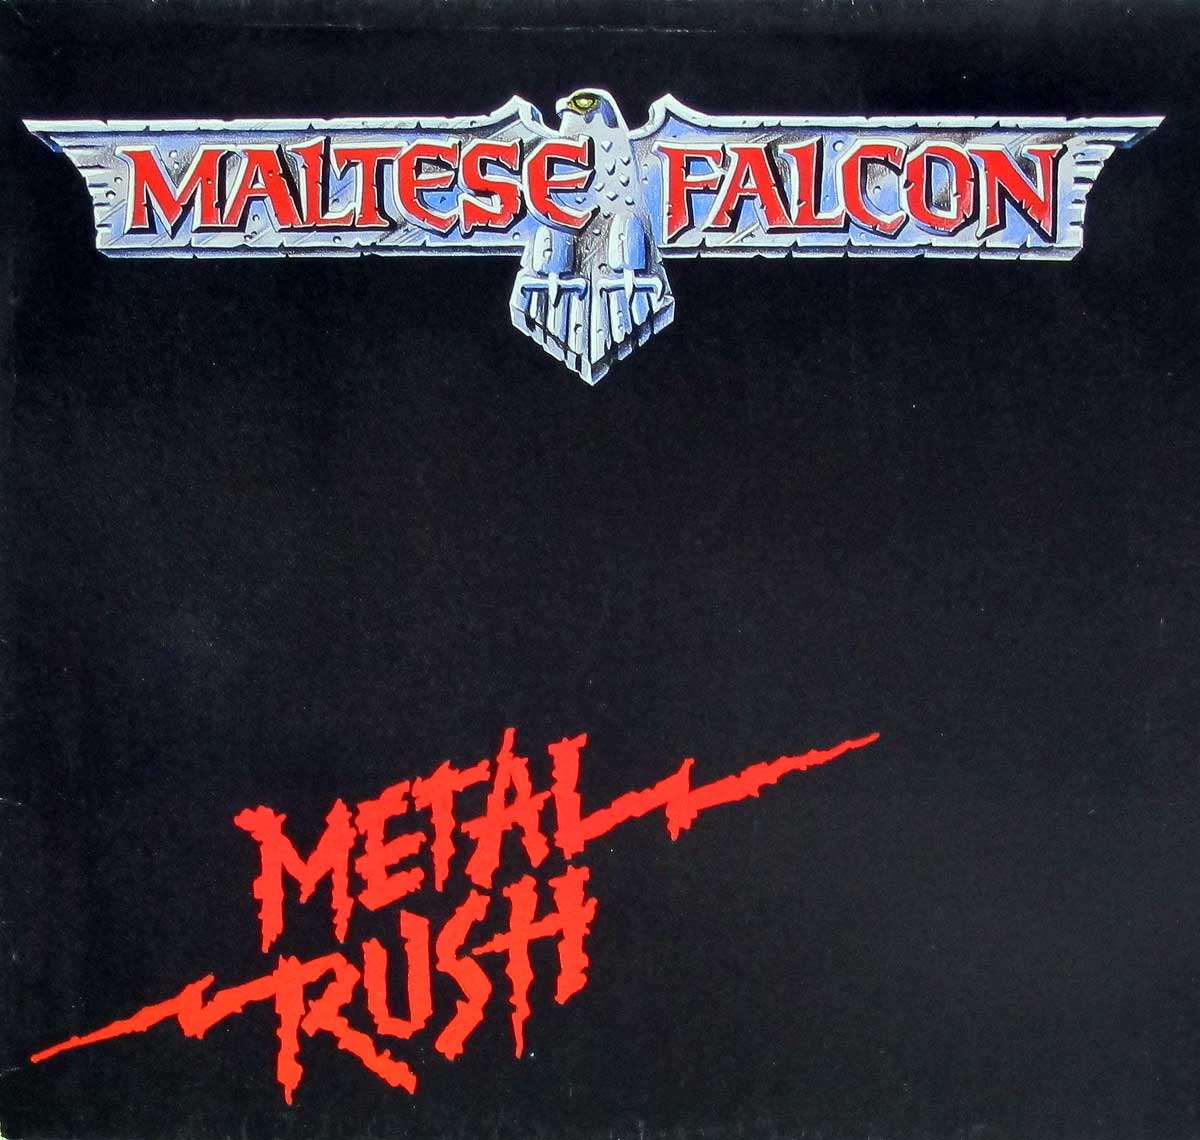 large album front cover photo of: MALTESE FALCON METAL RUSH 